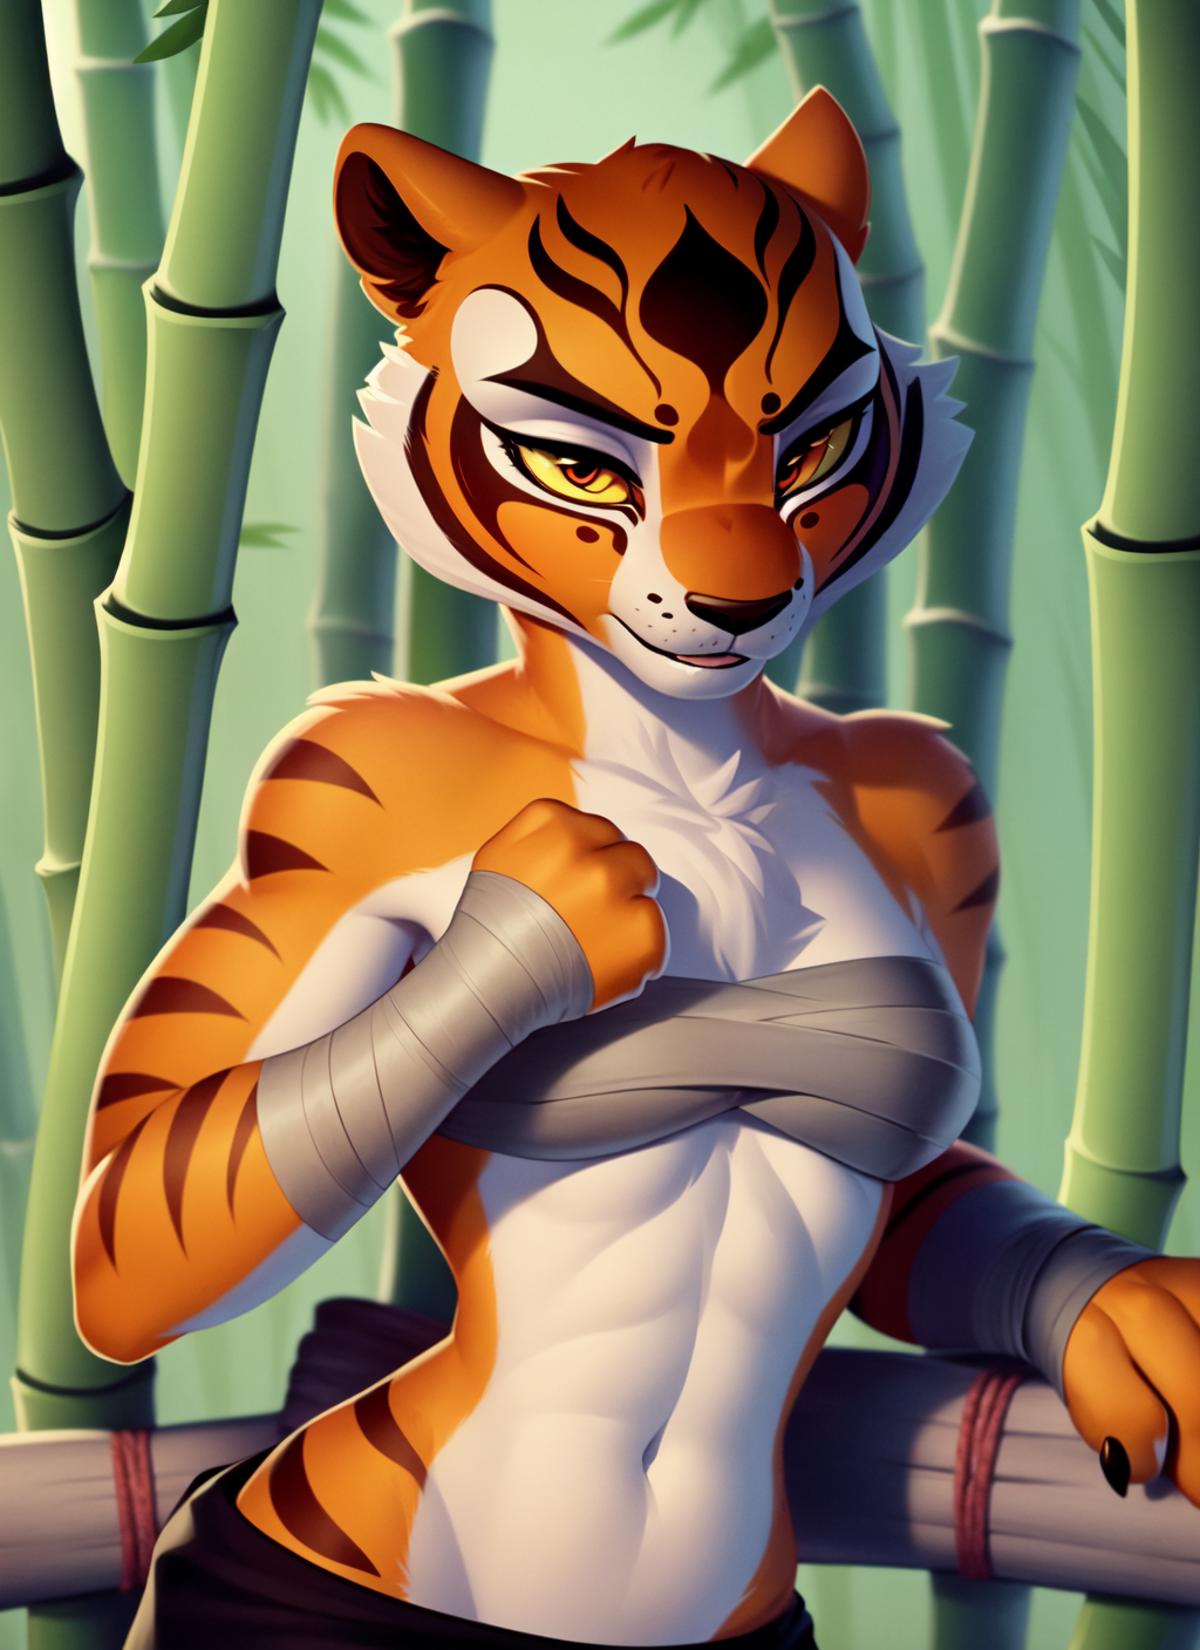 Master Tigress (Kung Fu Panda) image by FinalEclipse